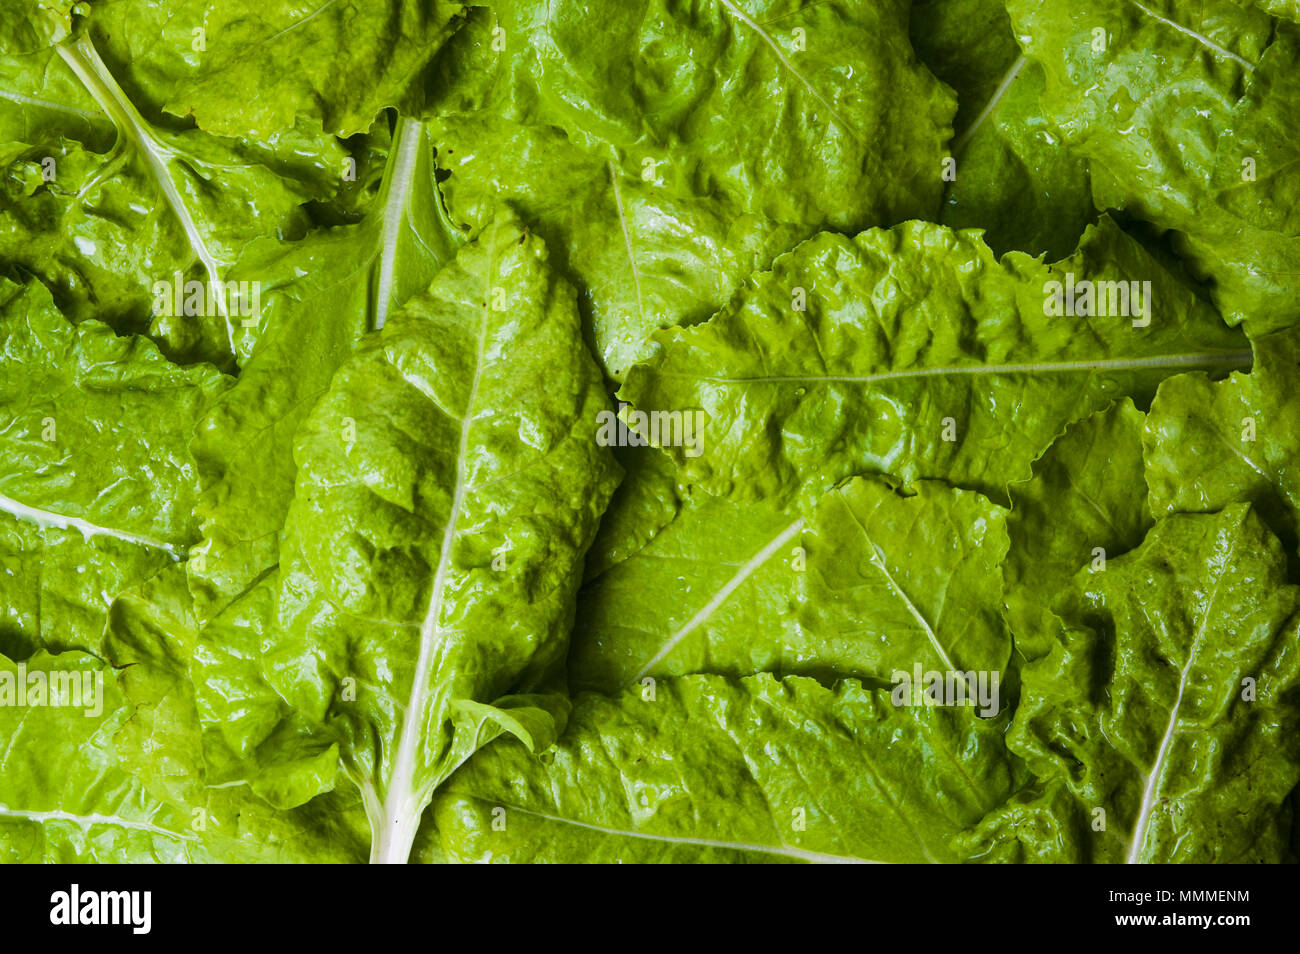 Mangel cavolo verde materie prime vegetali texture close up Foto Stock